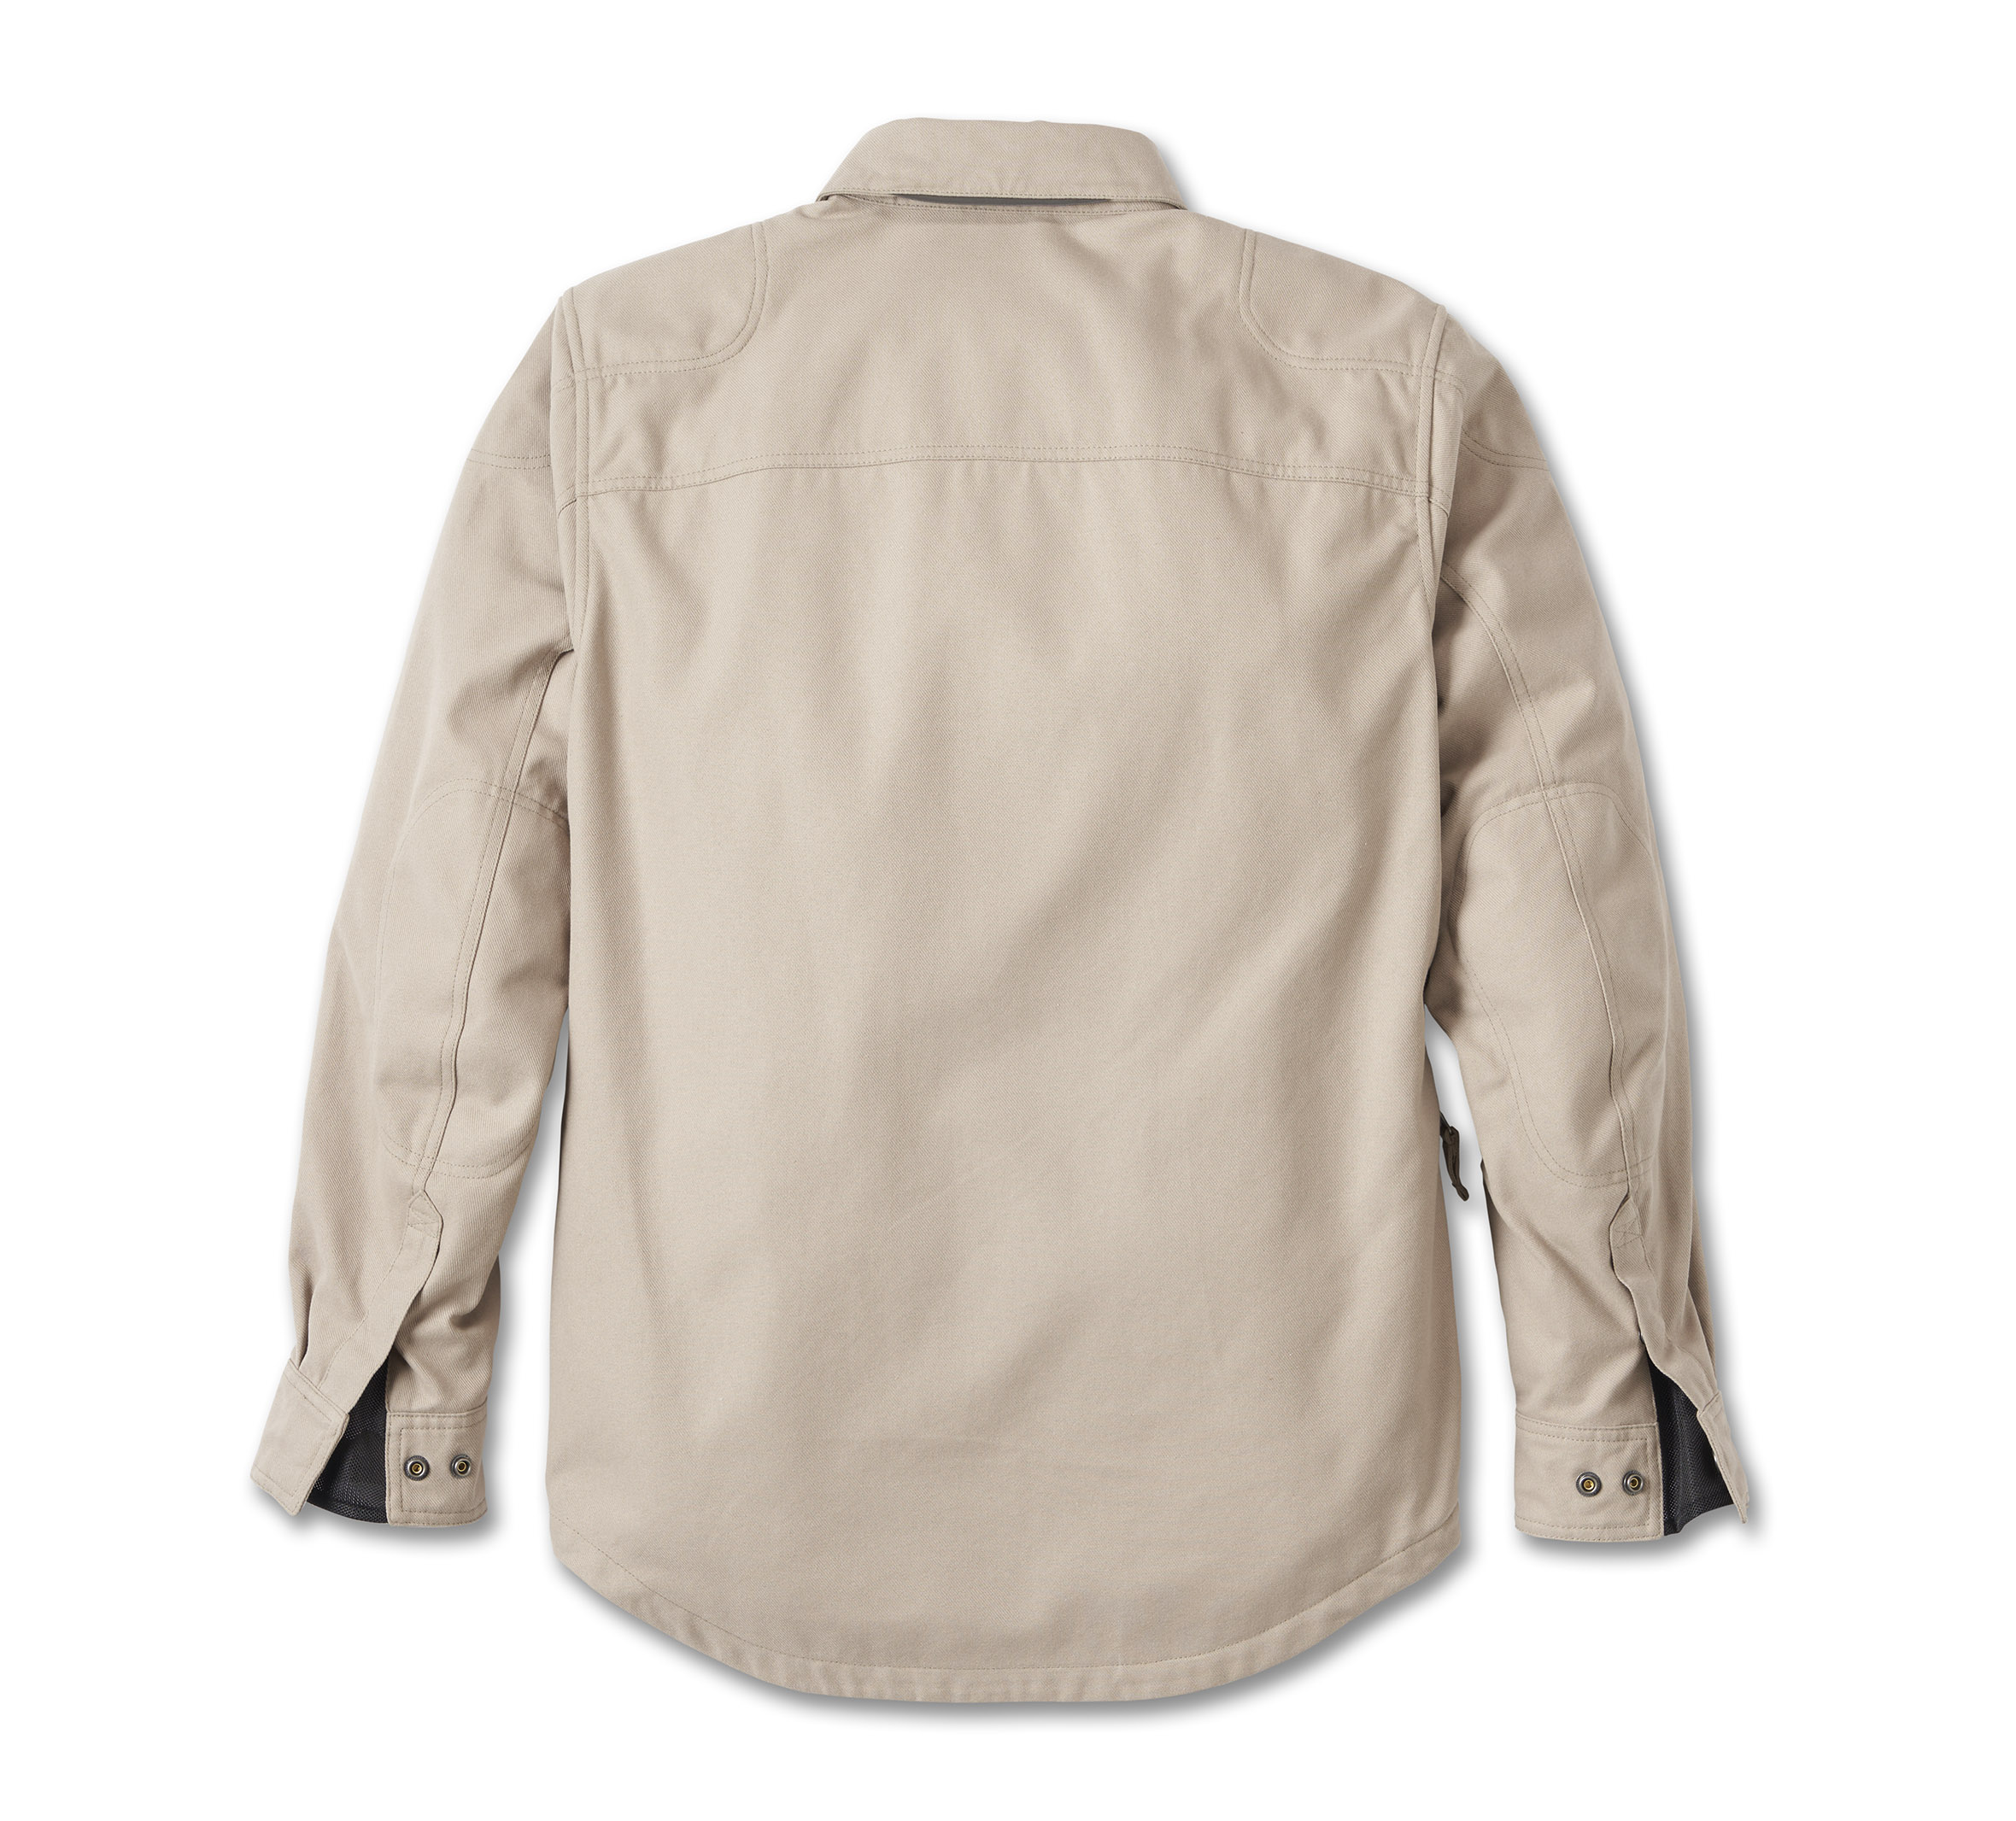 Men's Operative Riding Shirt Jacket